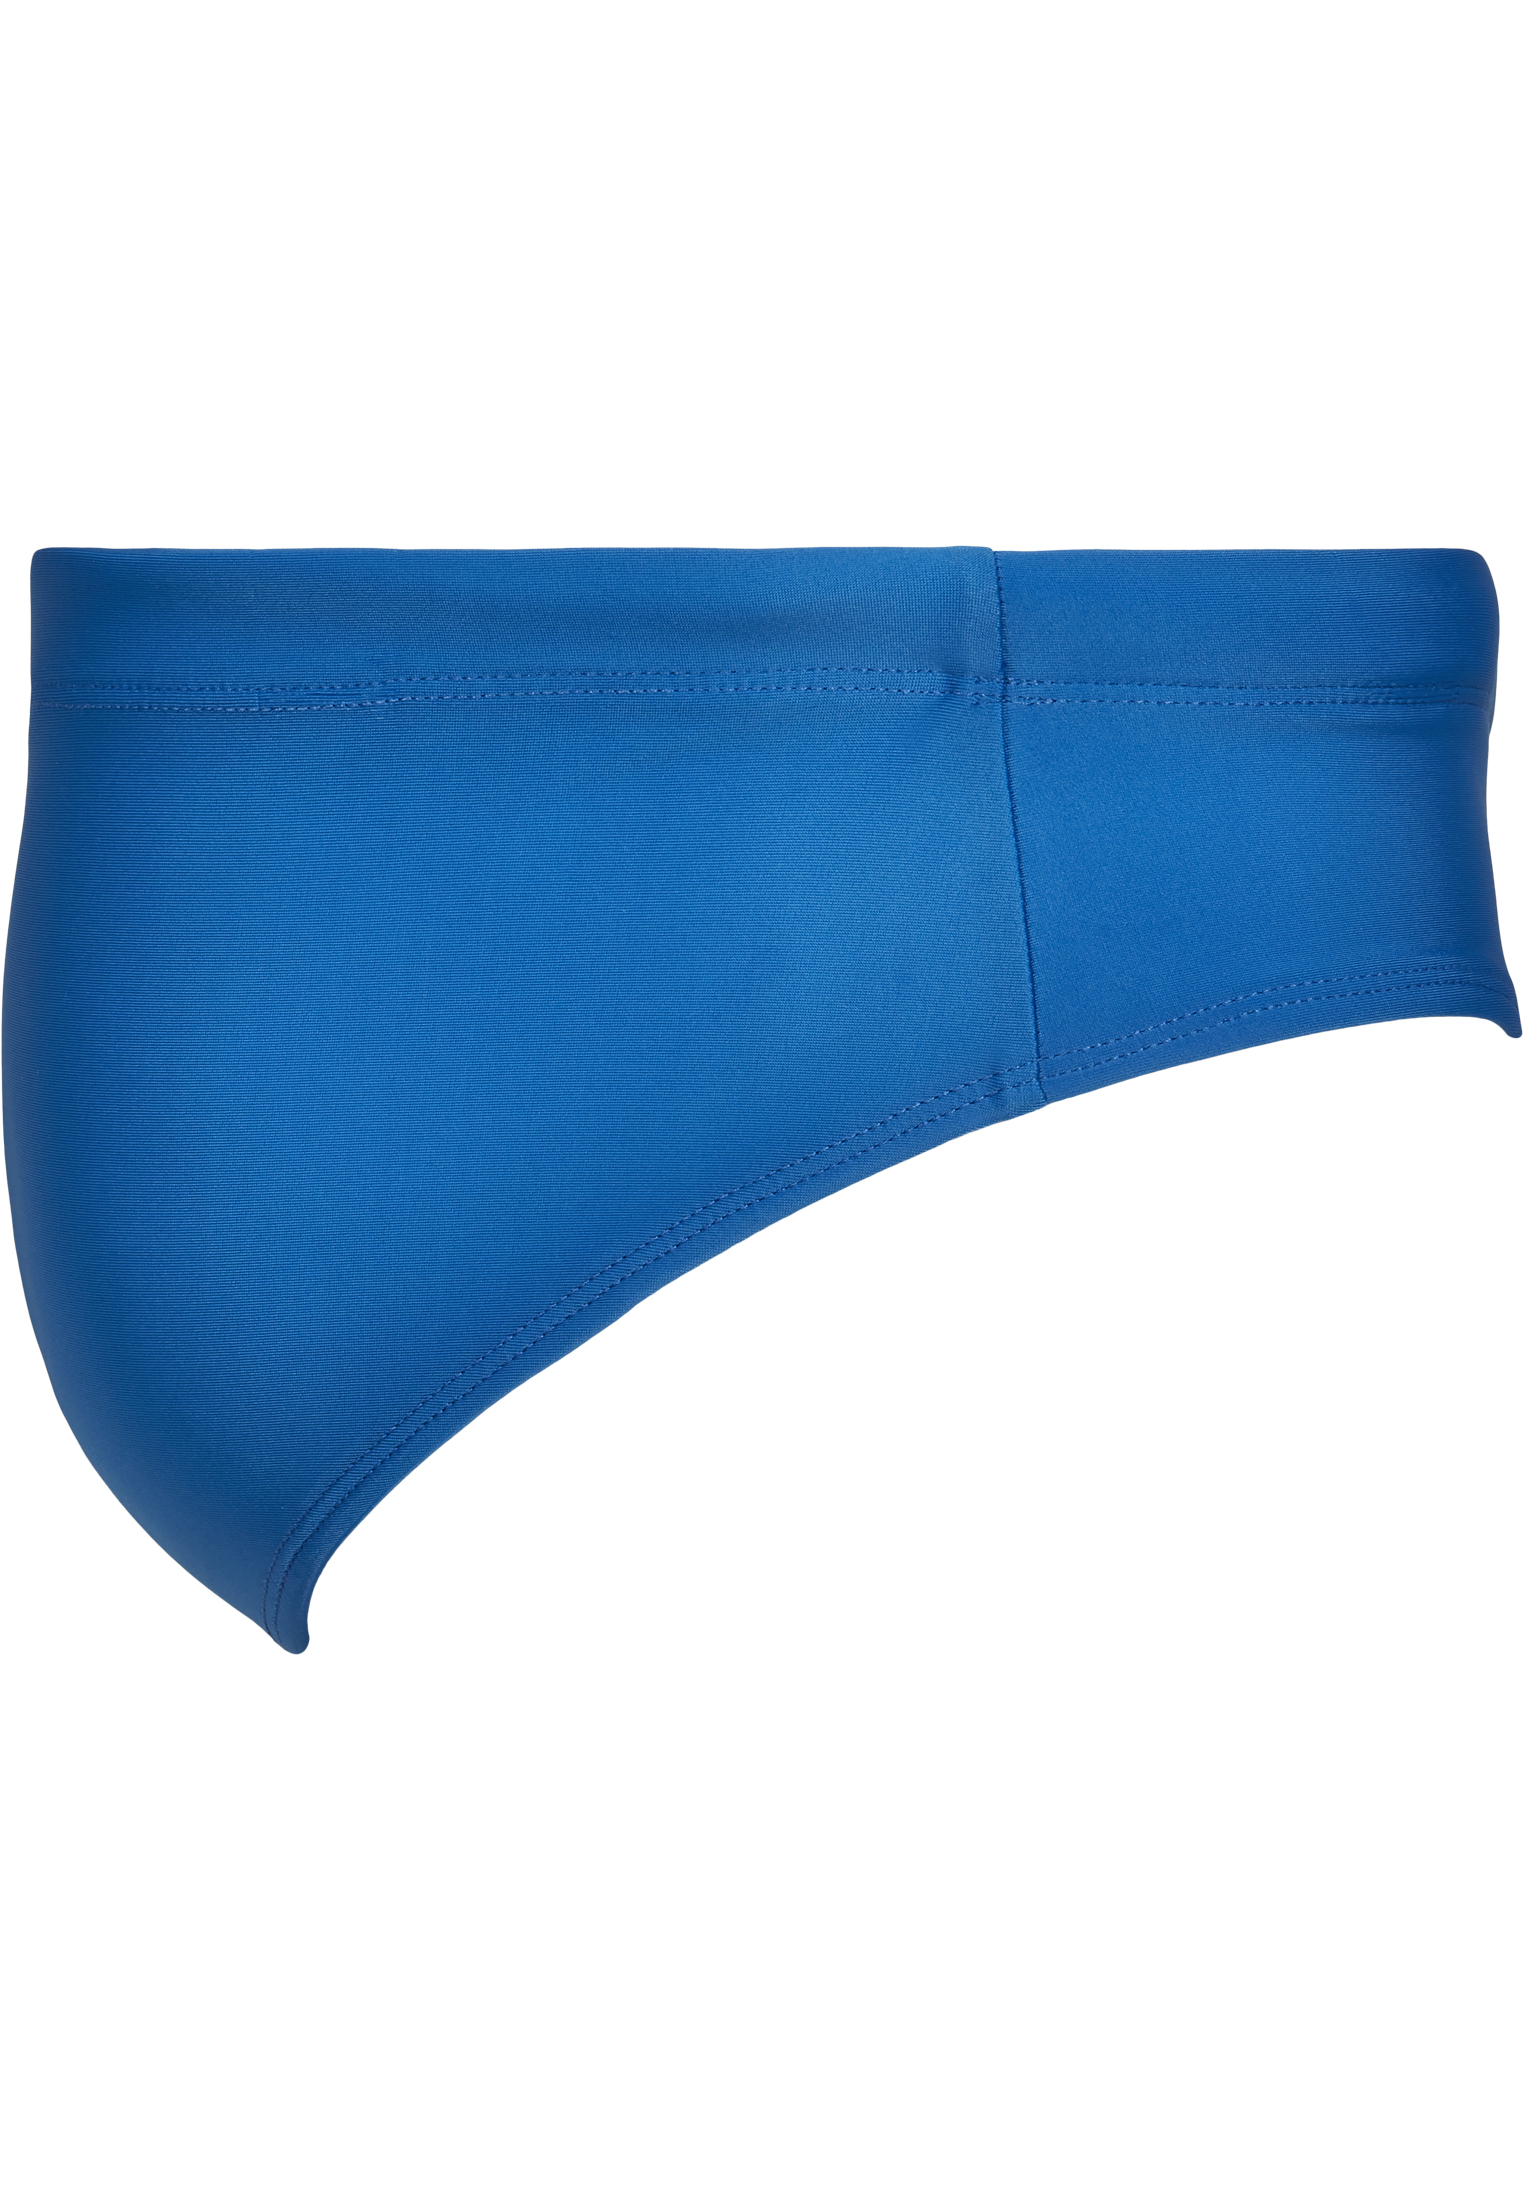 Bademode Basic Swim Brief in Farbe cobalt blue